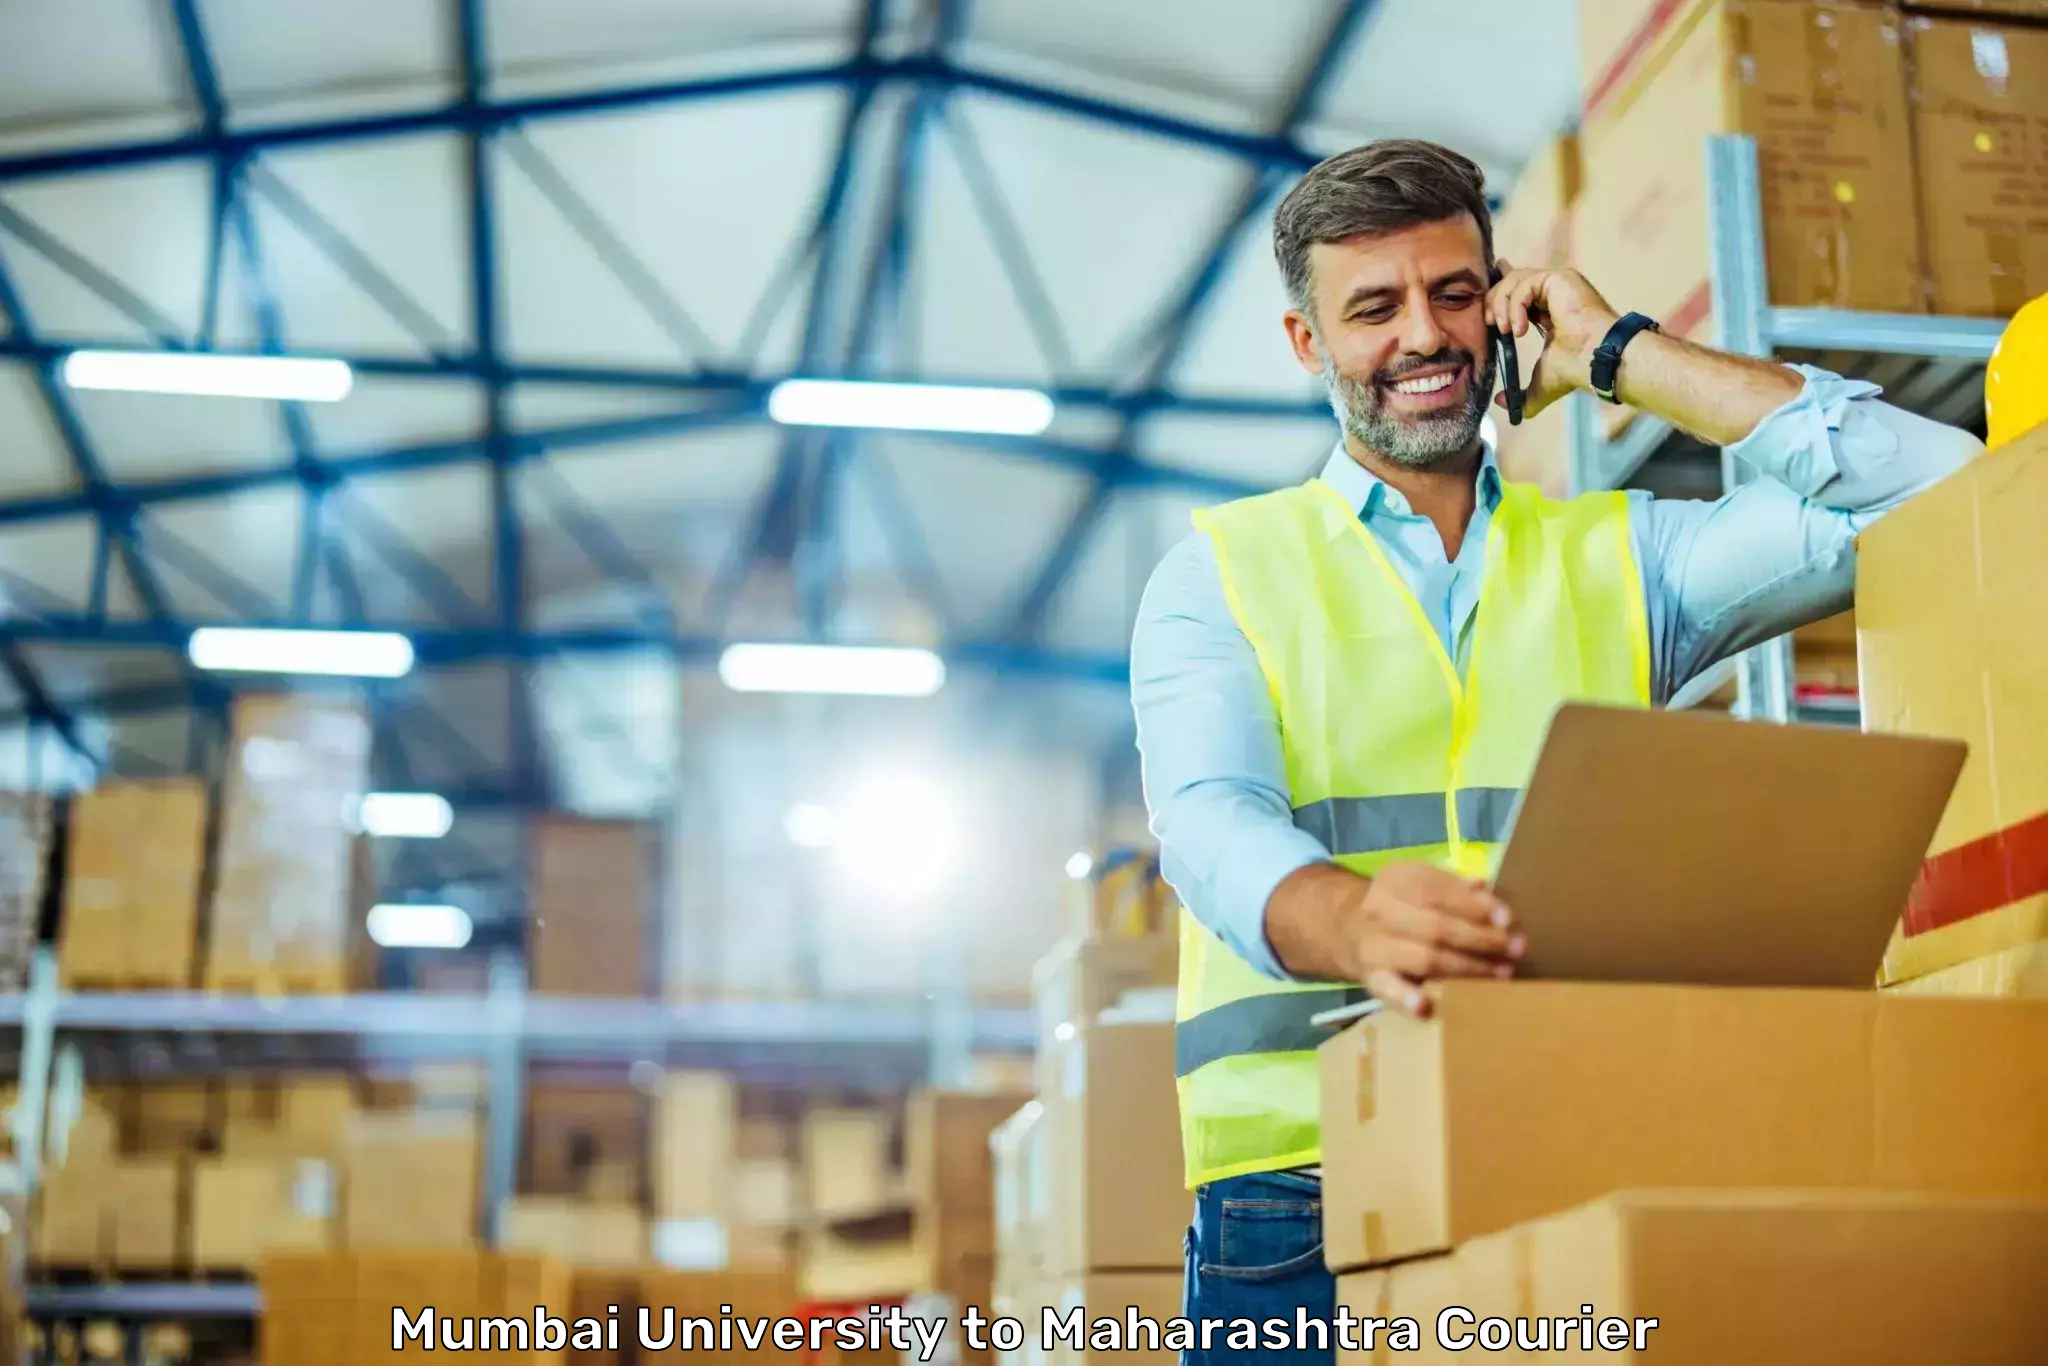 Courier service efficiency Mumbai University to Solapur